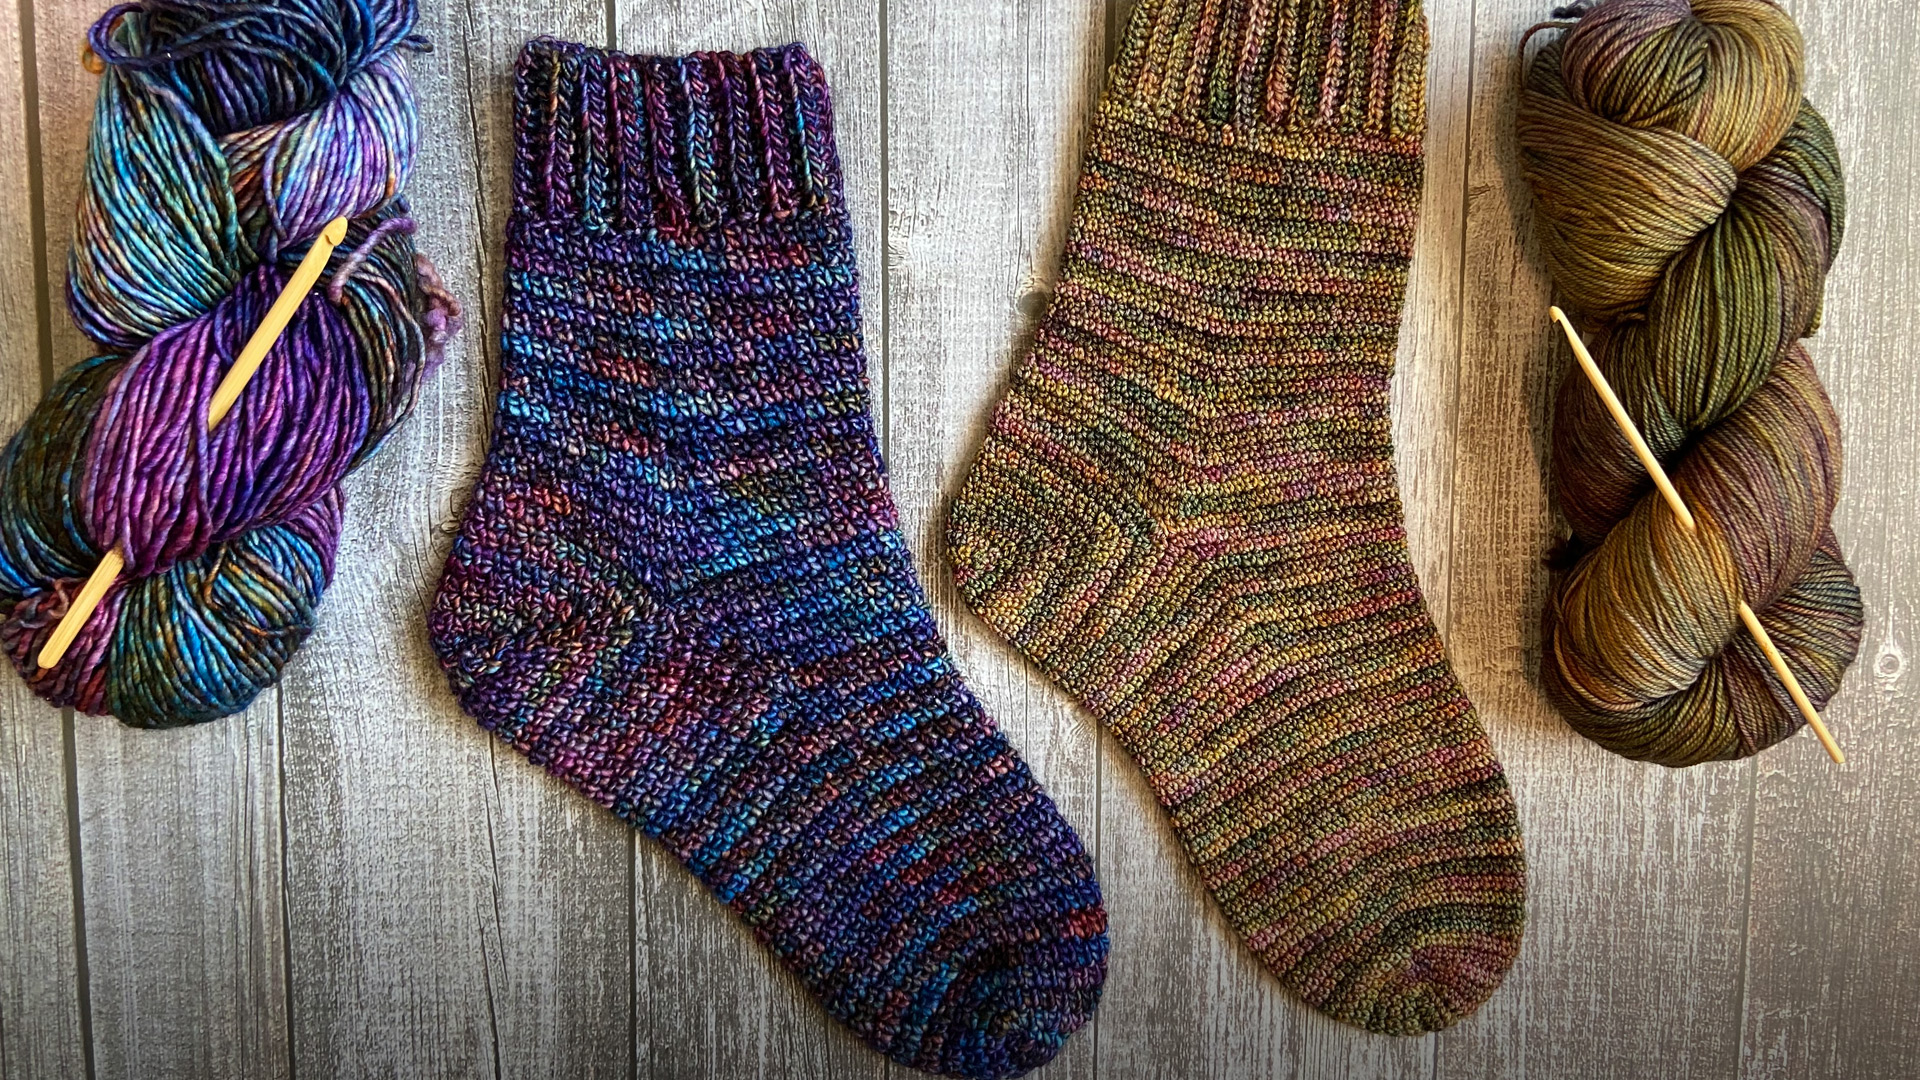 Yoga Socks Free Crochet Patterns & Paid - DIY Magazine  Yoga socks crochet  pattern, Crochet socks pattern, Yoga socks crochet